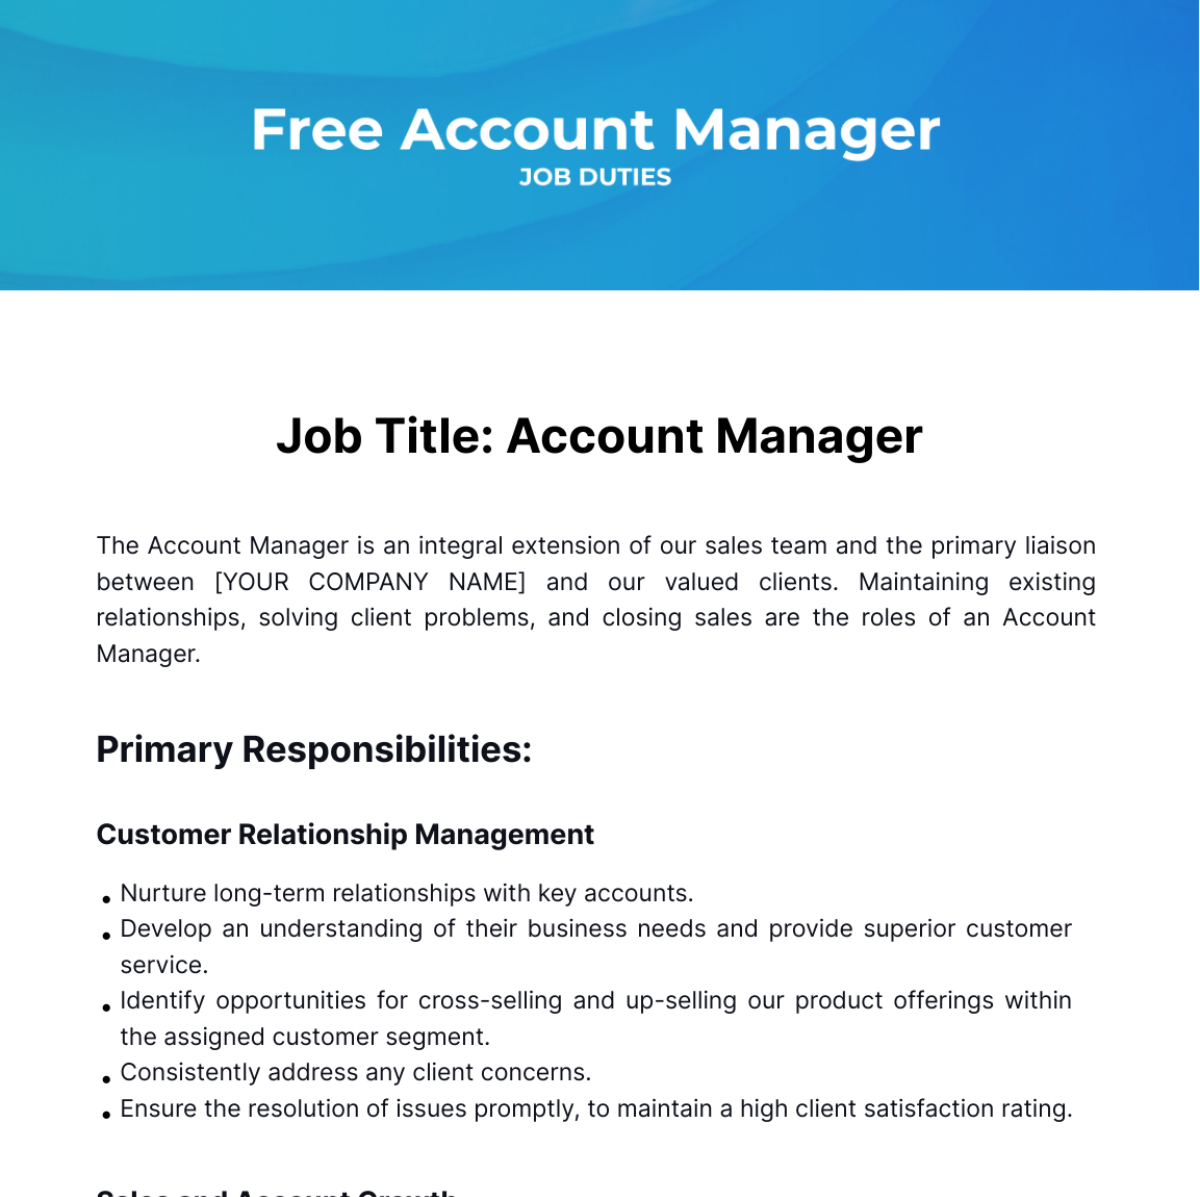 Free Account Manager Job Duties Template